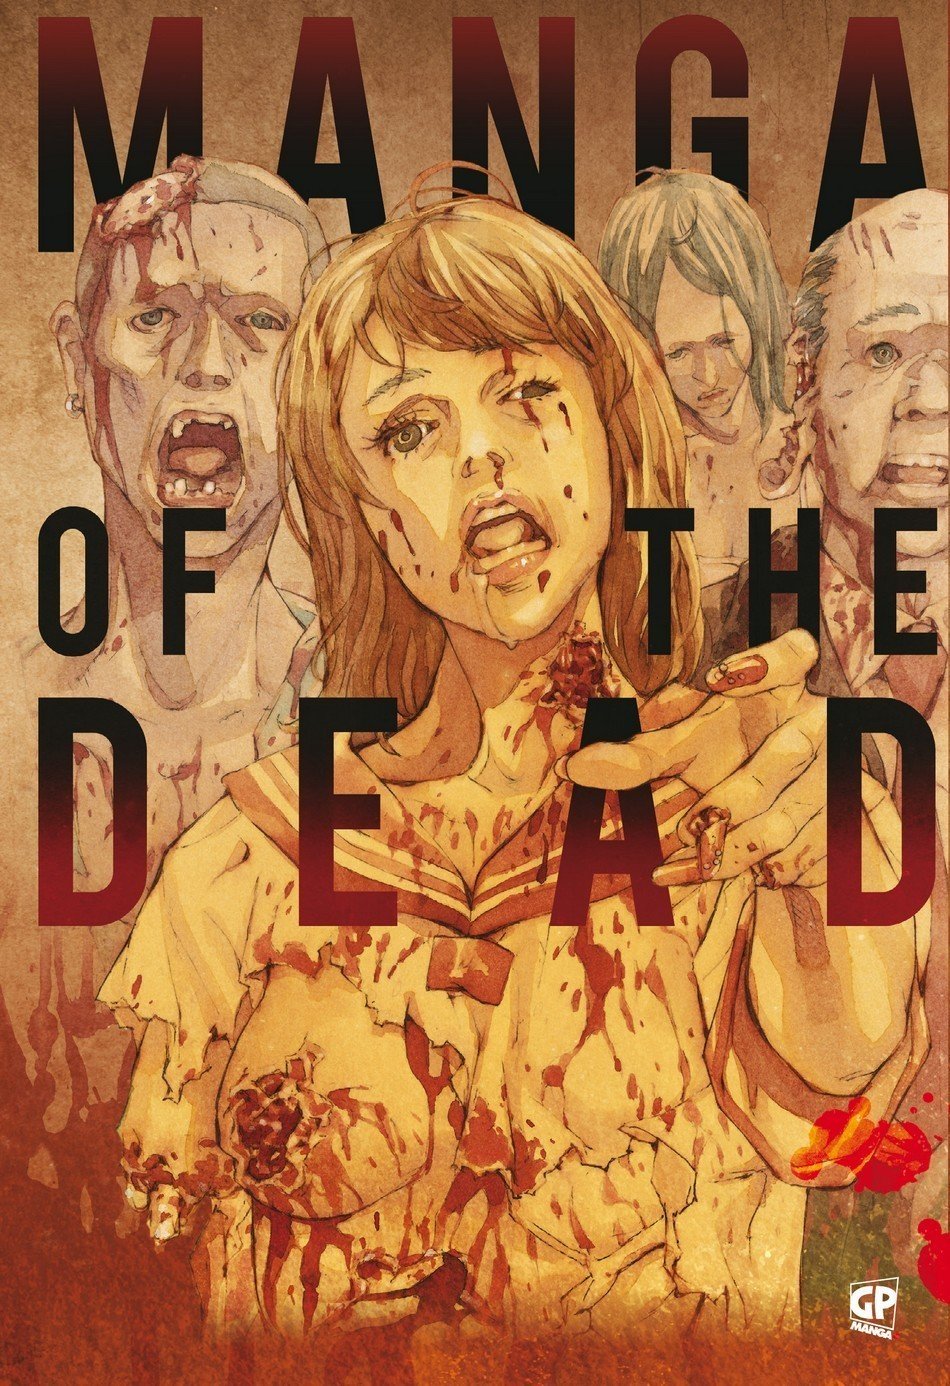 manga of the dead